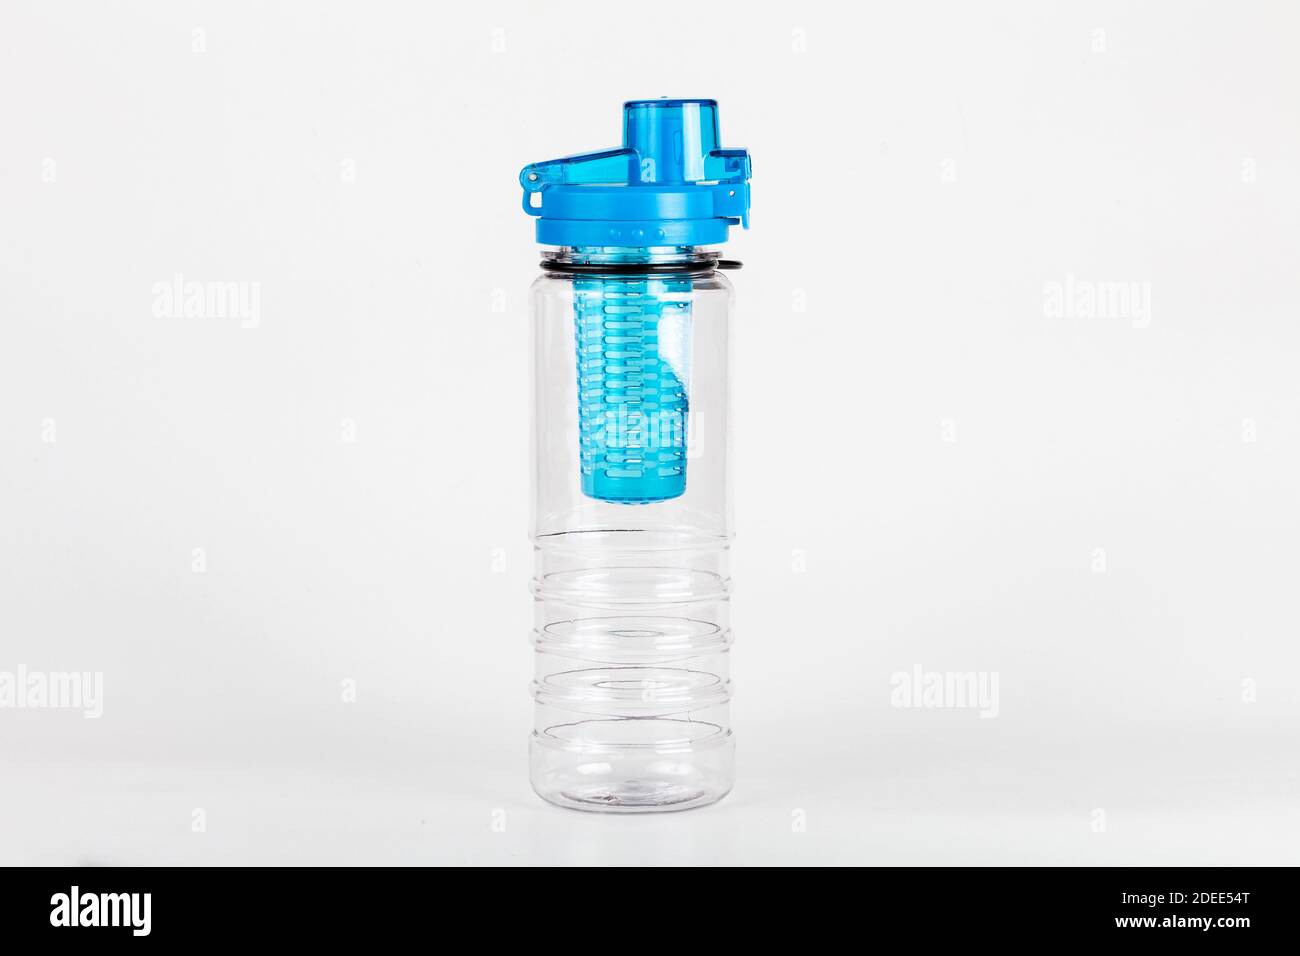 https://c8.alamy.com/comp/2DEE54T/simple-modern-empty-blue-hard-plastic-sport-water-bottle-with-fruit-infuser-isolated-single-object-blank-reusable-bottle-studio-shot-hydration-2DEE54T.jpg